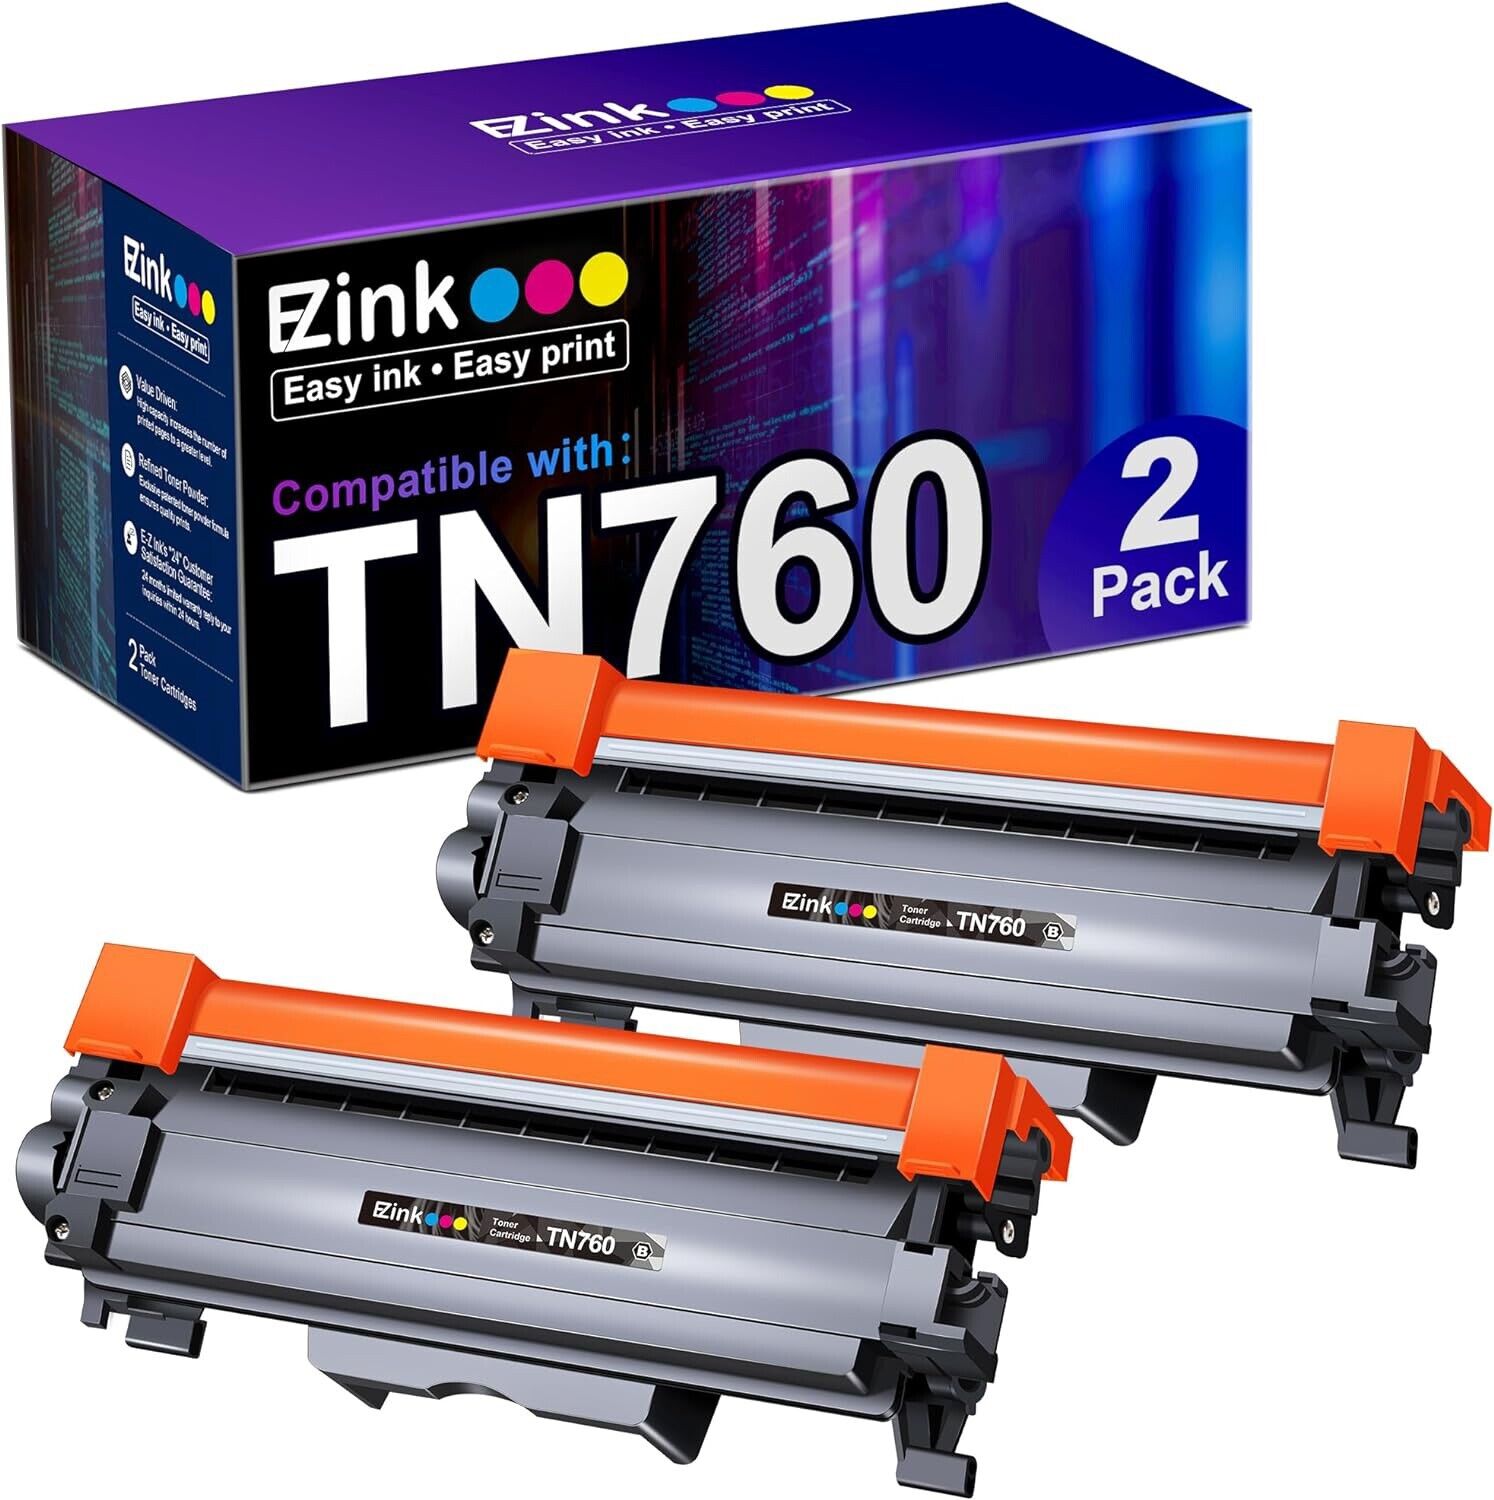 EZink Black Premium Toner Cartridges TN760 Black toner Ink